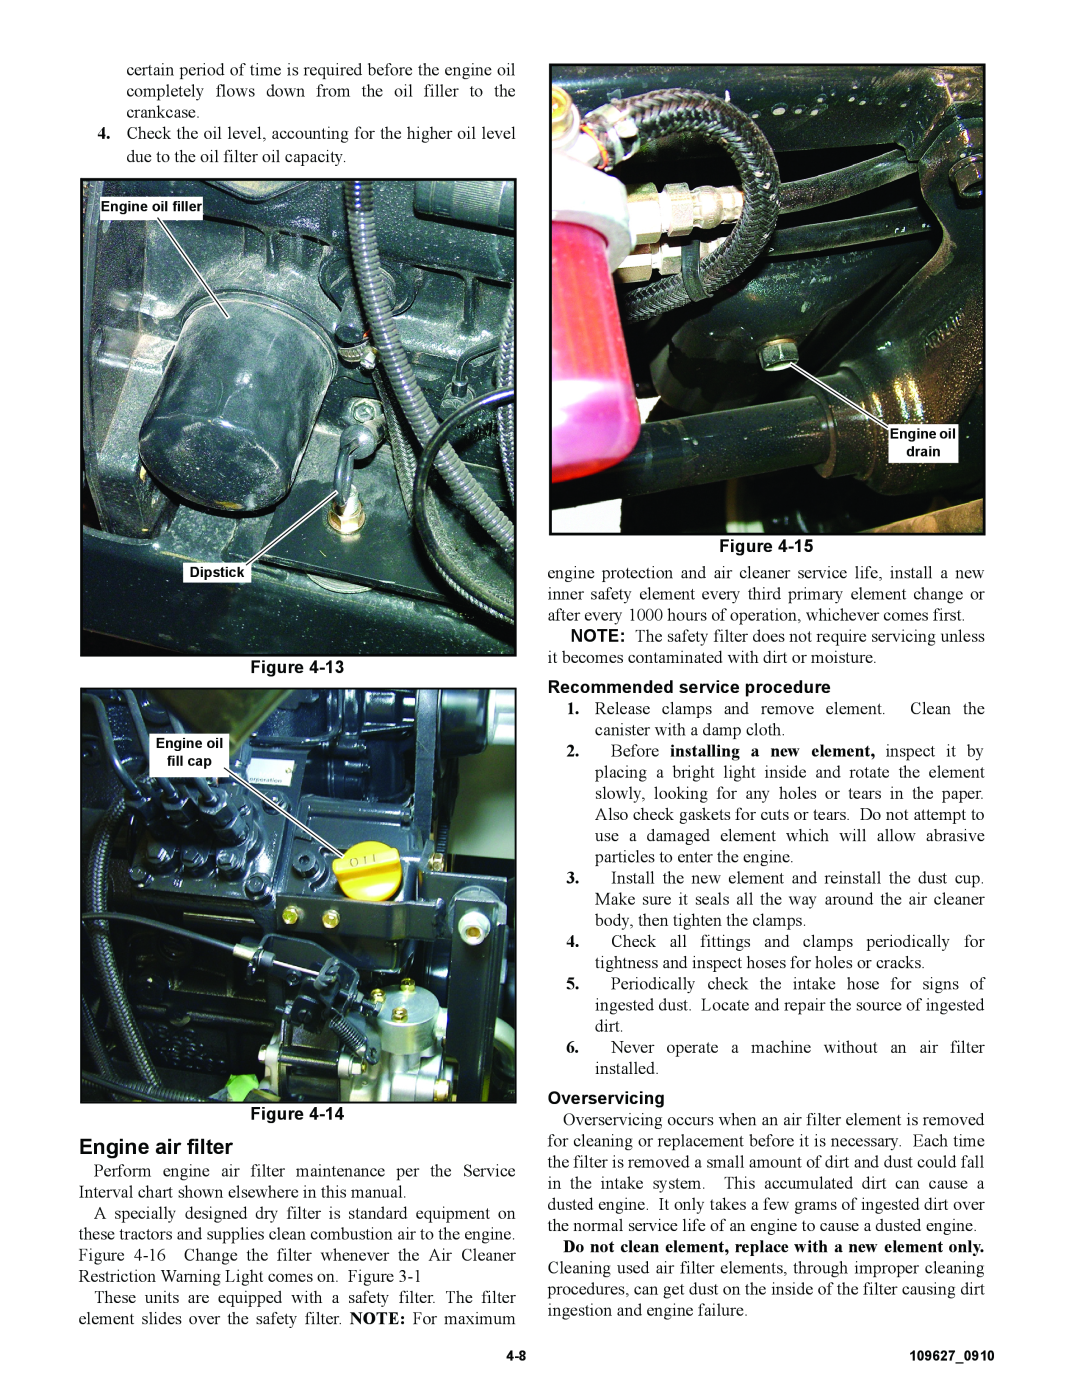 Hustler Turf 3500, 3700 owner manual Engine air filter, Recommended service procedure, Overservicing 